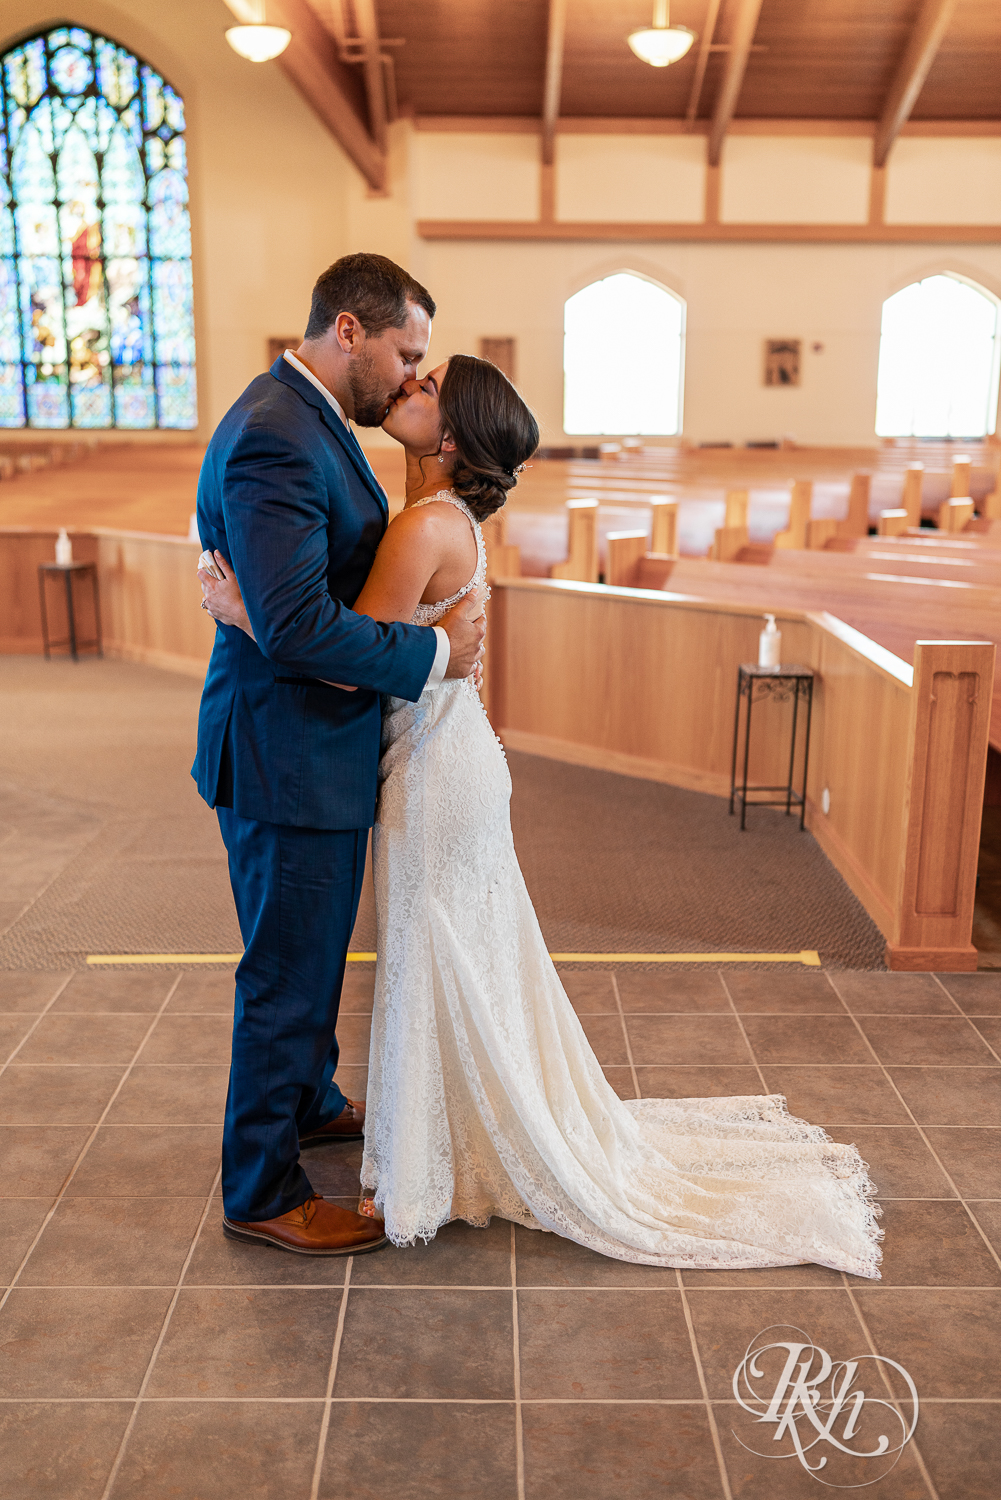 First look with bride and groom at Saint Joseph Catholic Church in Rosemount, Minnesota.